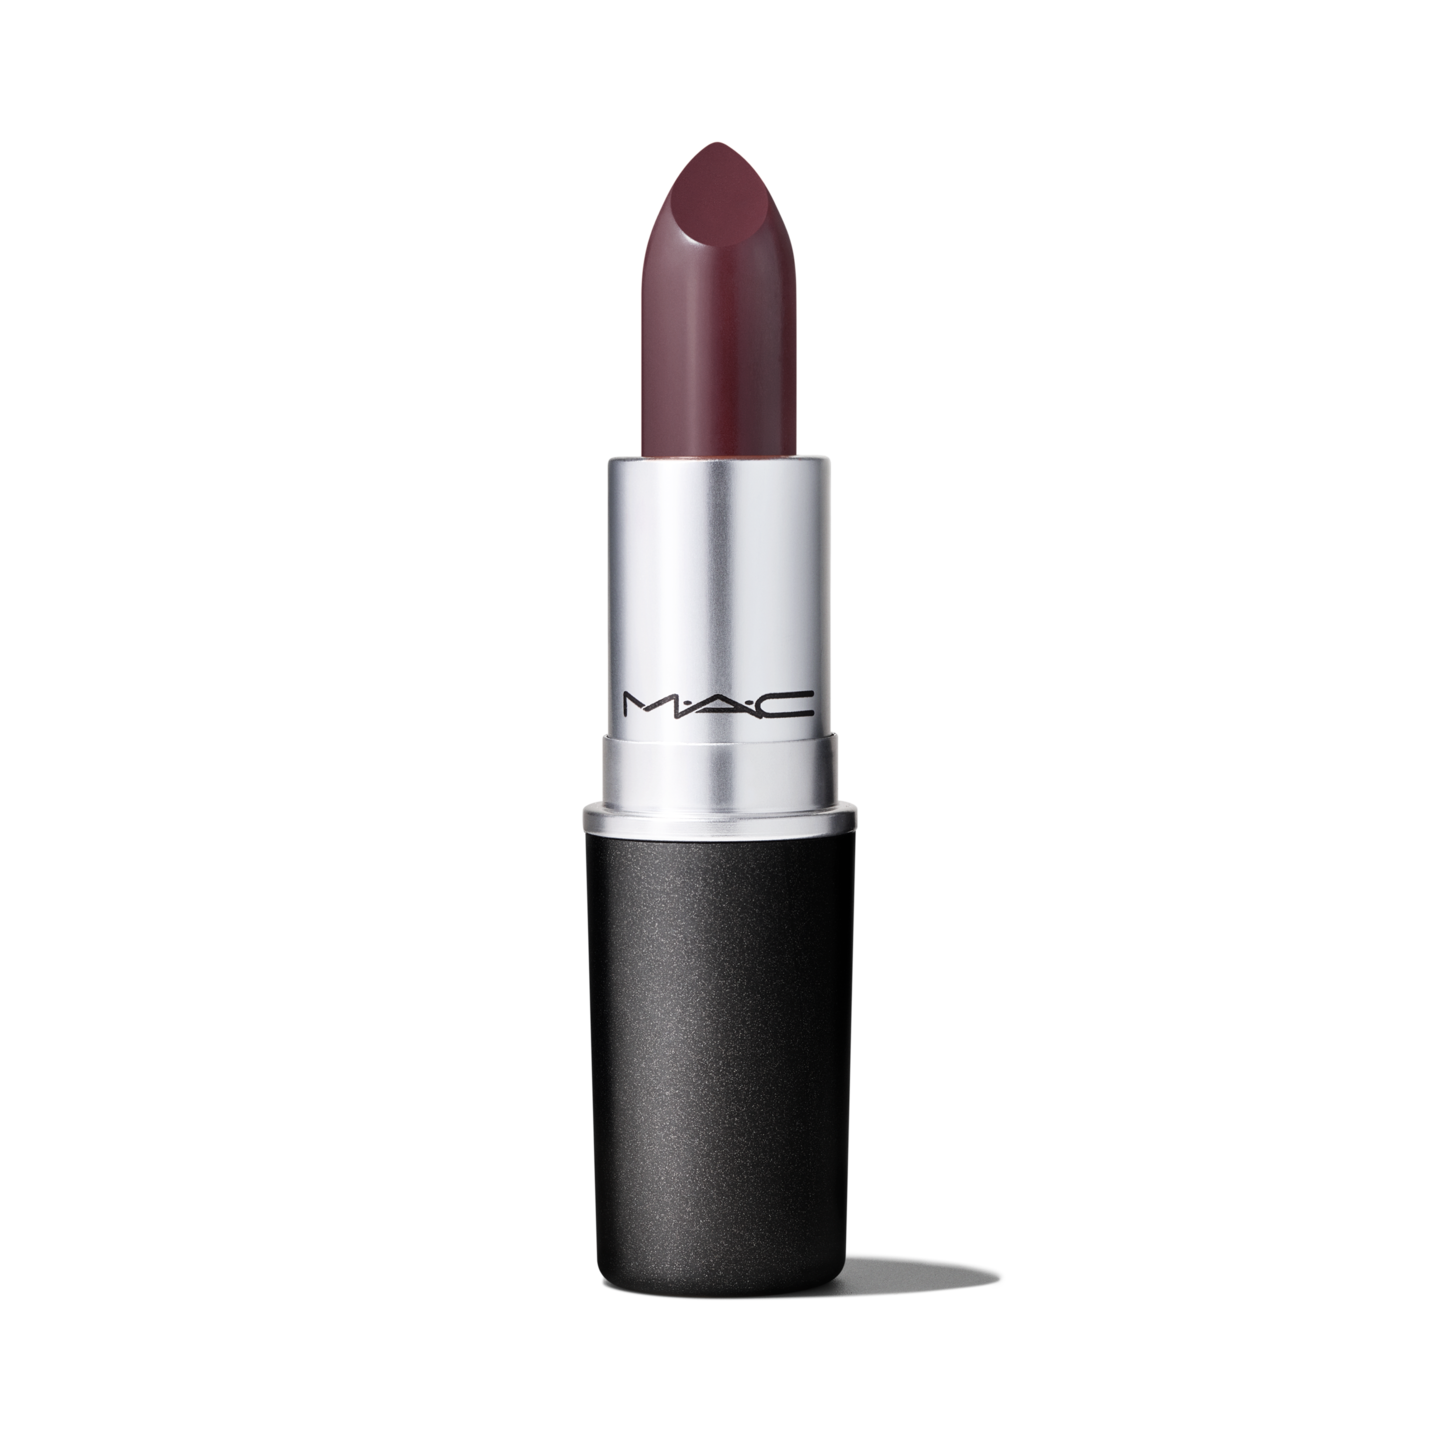 M.A.C Matte Lipstick, Standard, 0.1 fl oz - Honeylove for sale online